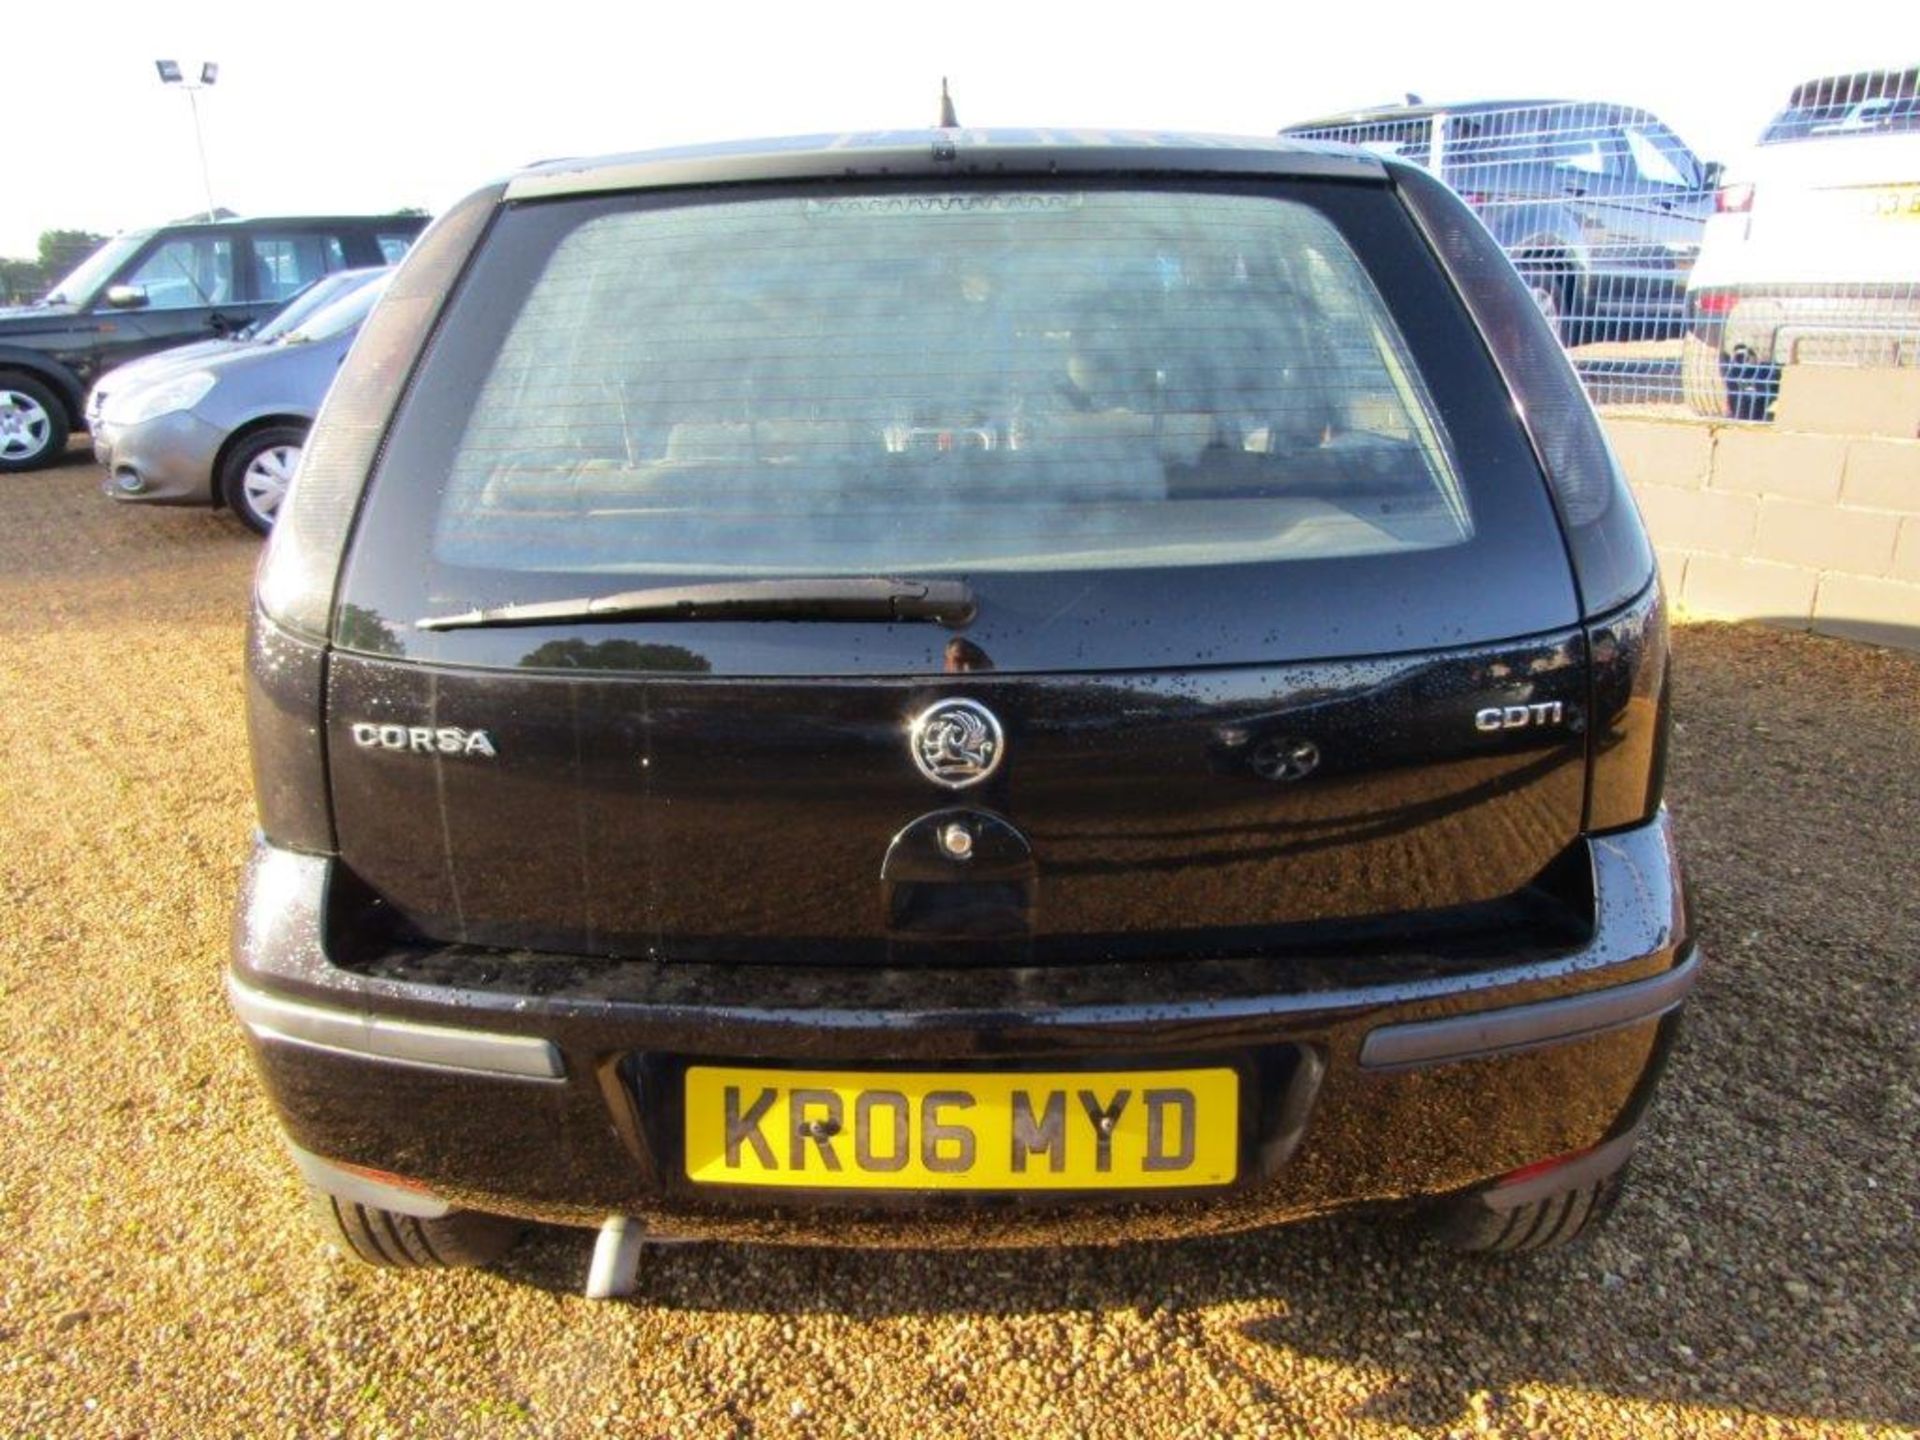 06 06 Vauxhall Corsa SXi CDTi - Image 2 of 22